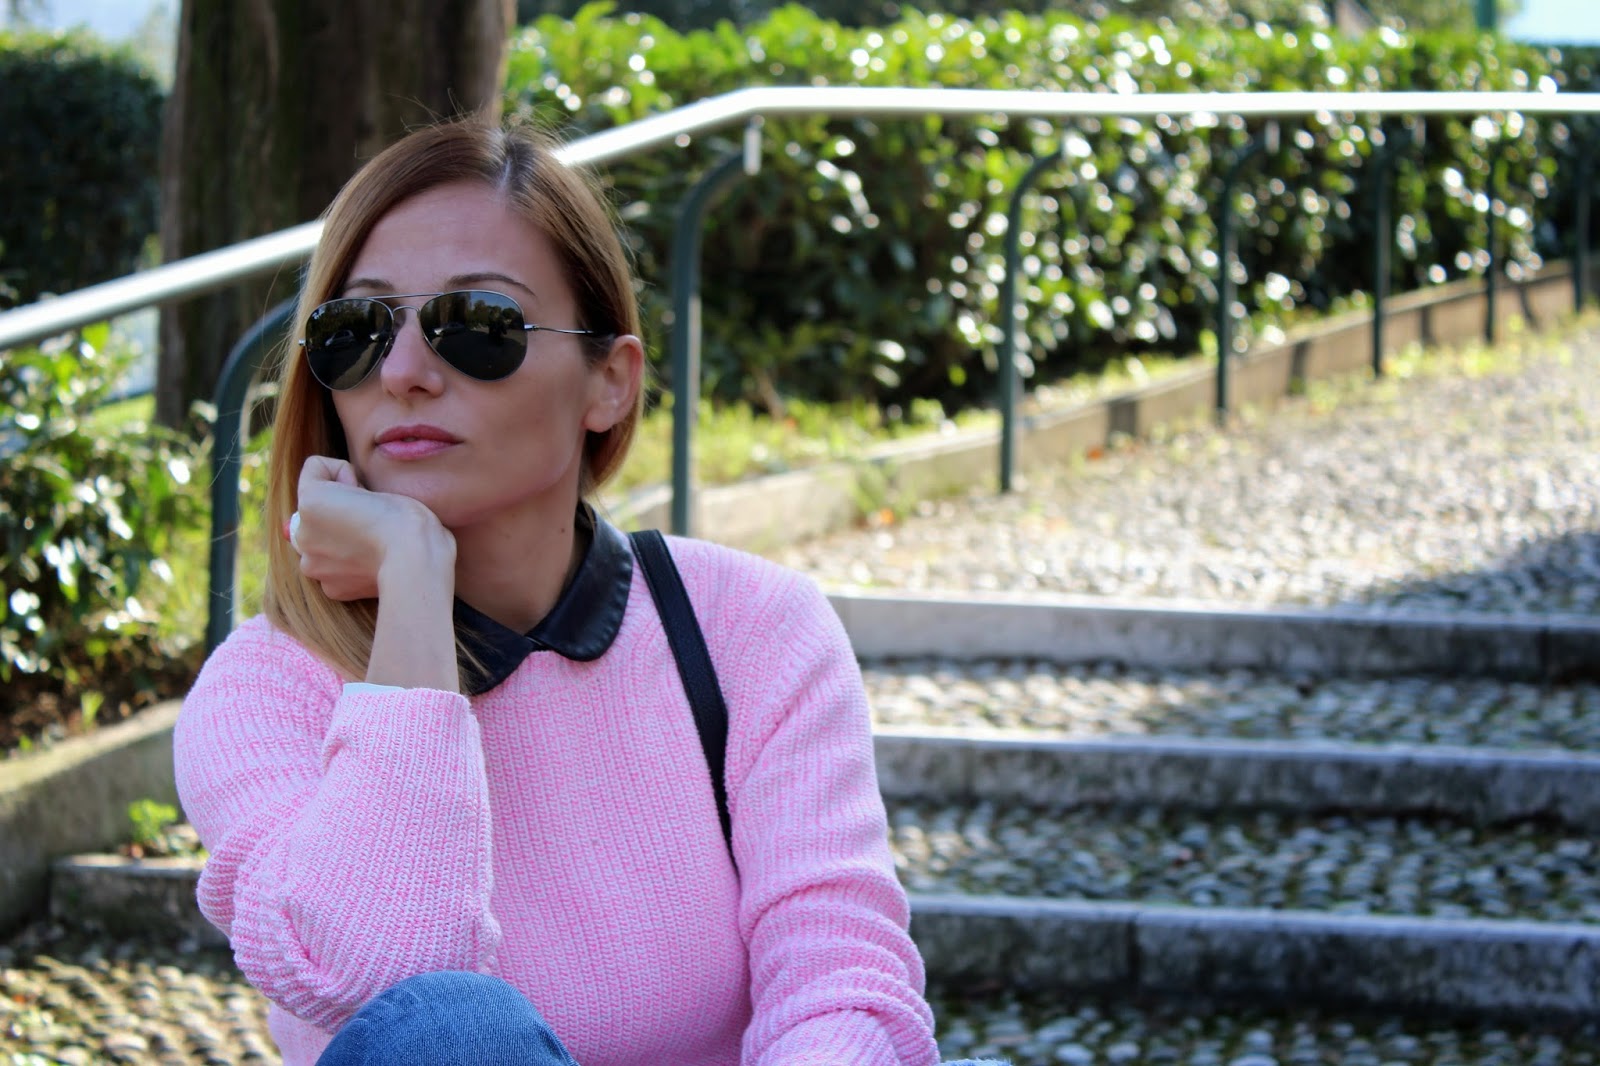 Eniwhere Fashion - Pink sweater - Boyfriend jeans